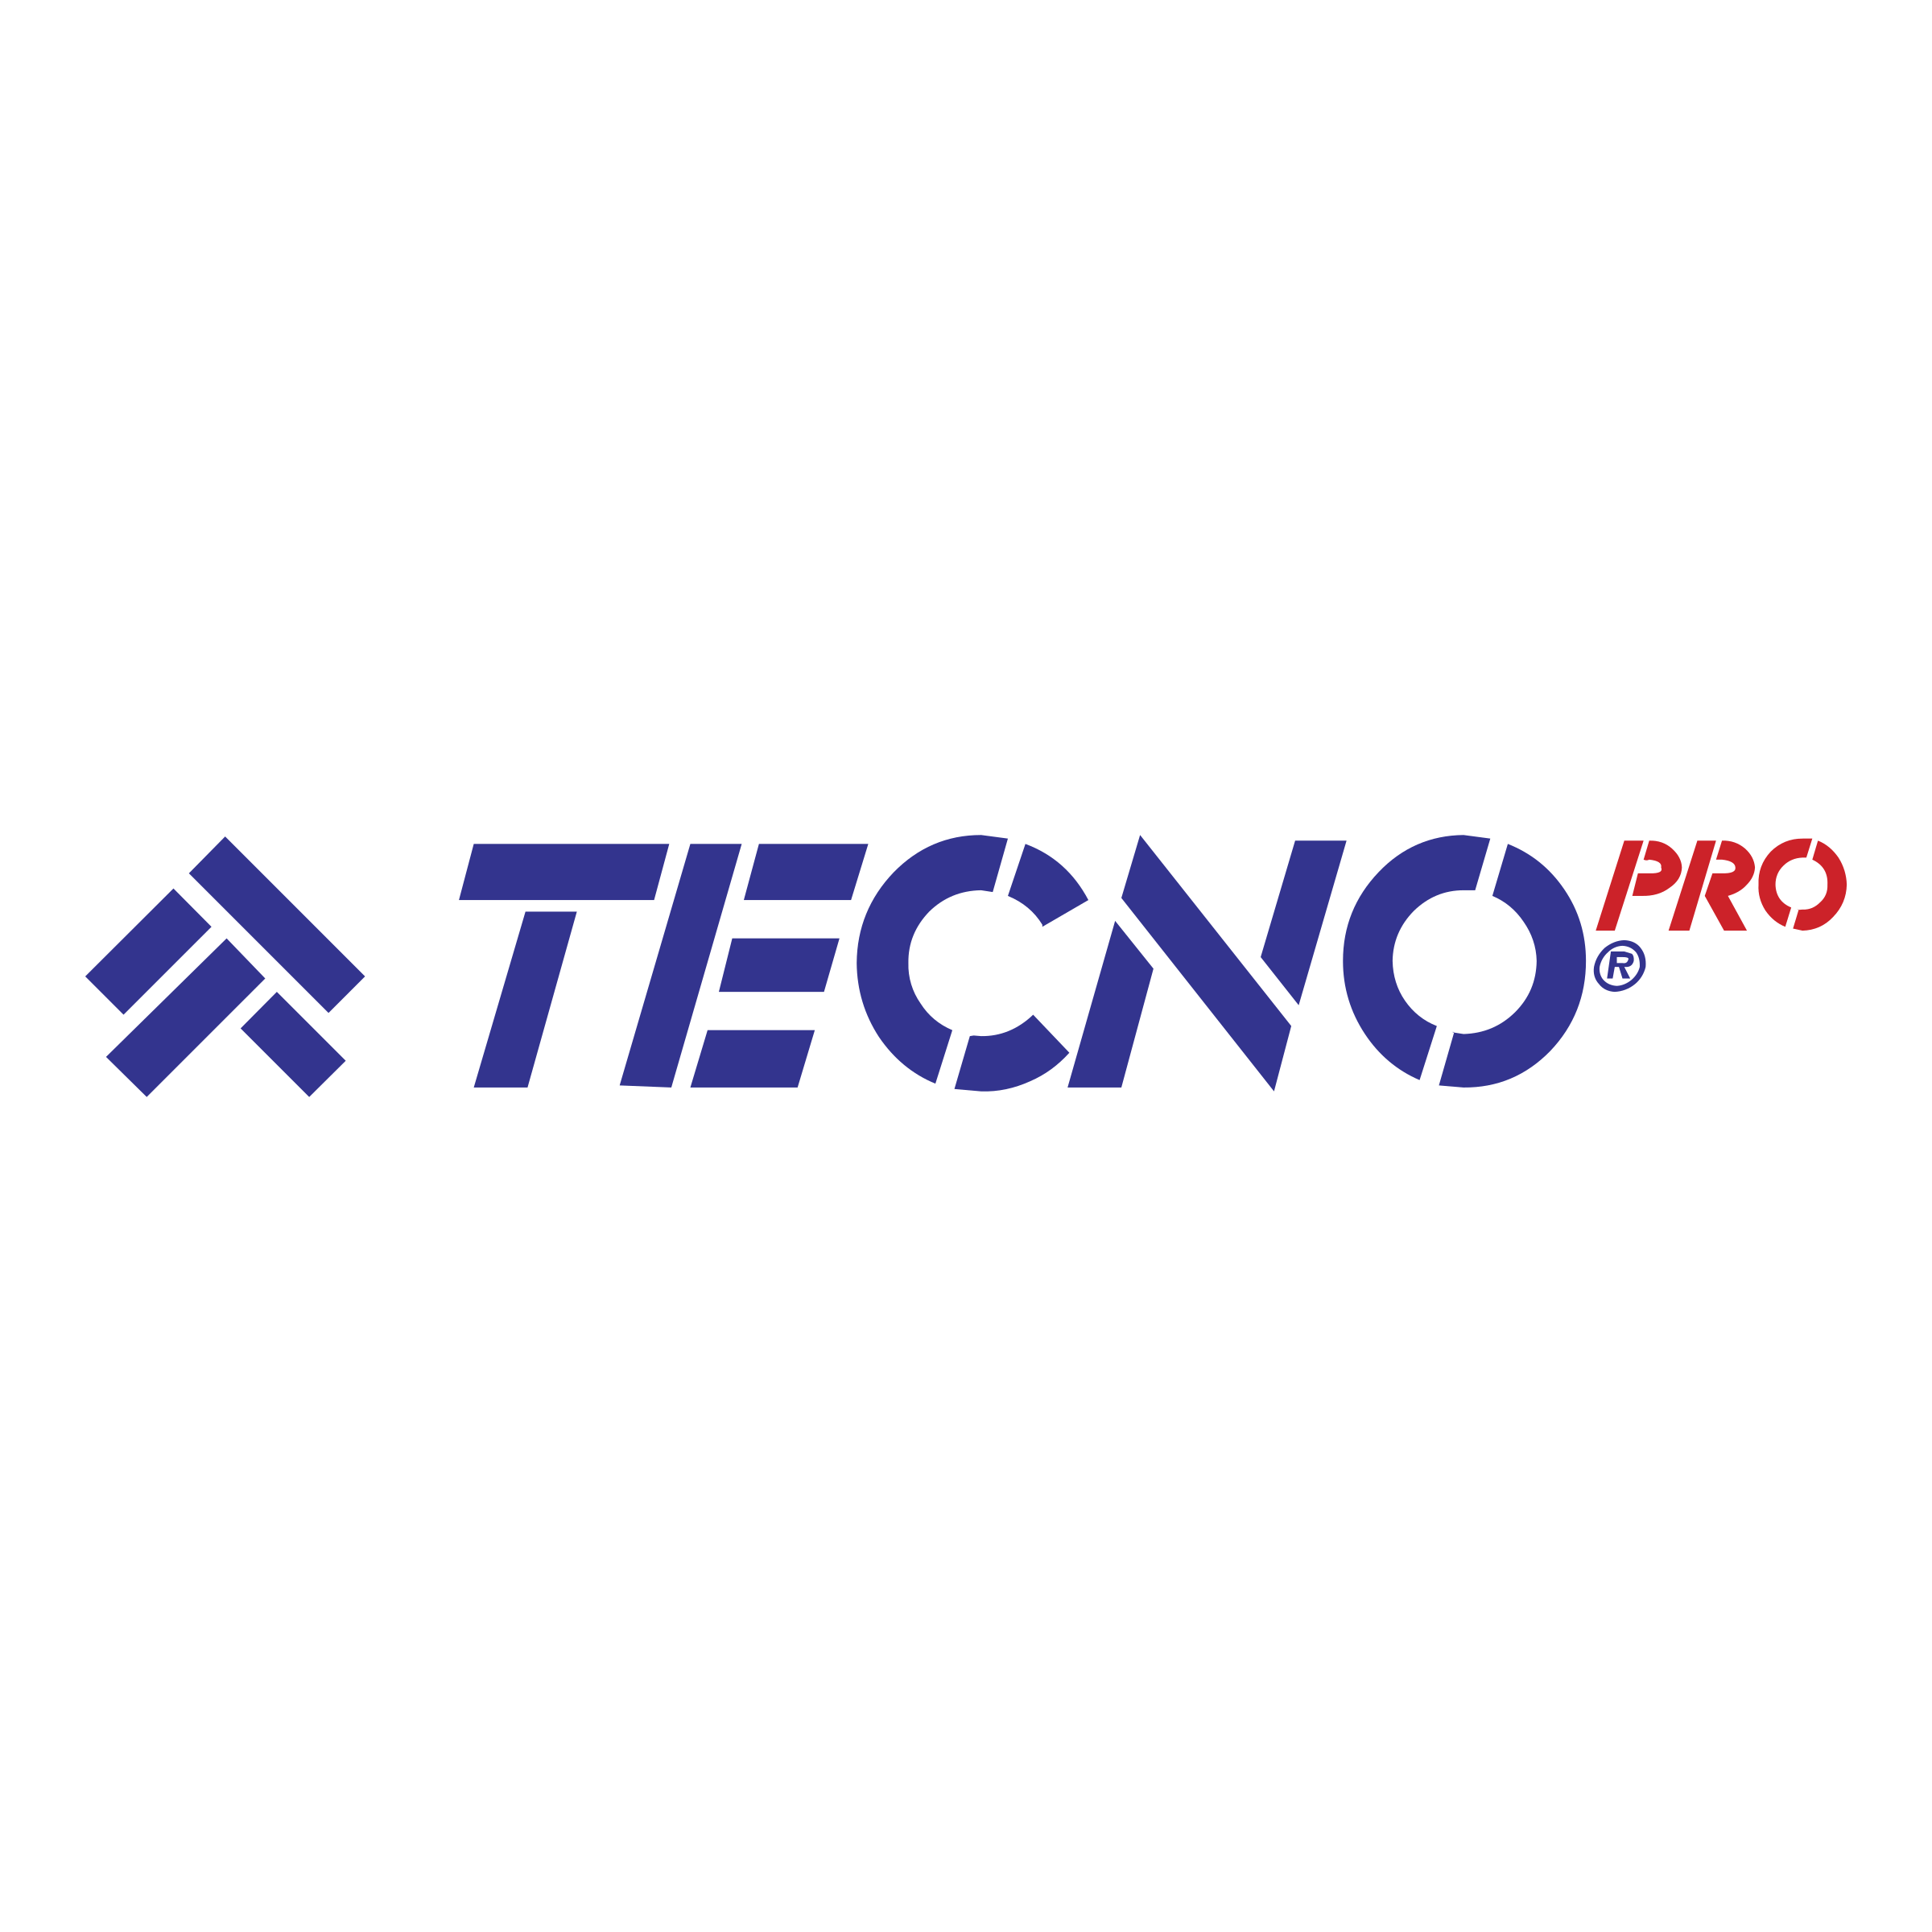 Tenco Logo - Tecno Pro Logo PNG Transparent & SVG Vector - Freebie Supply